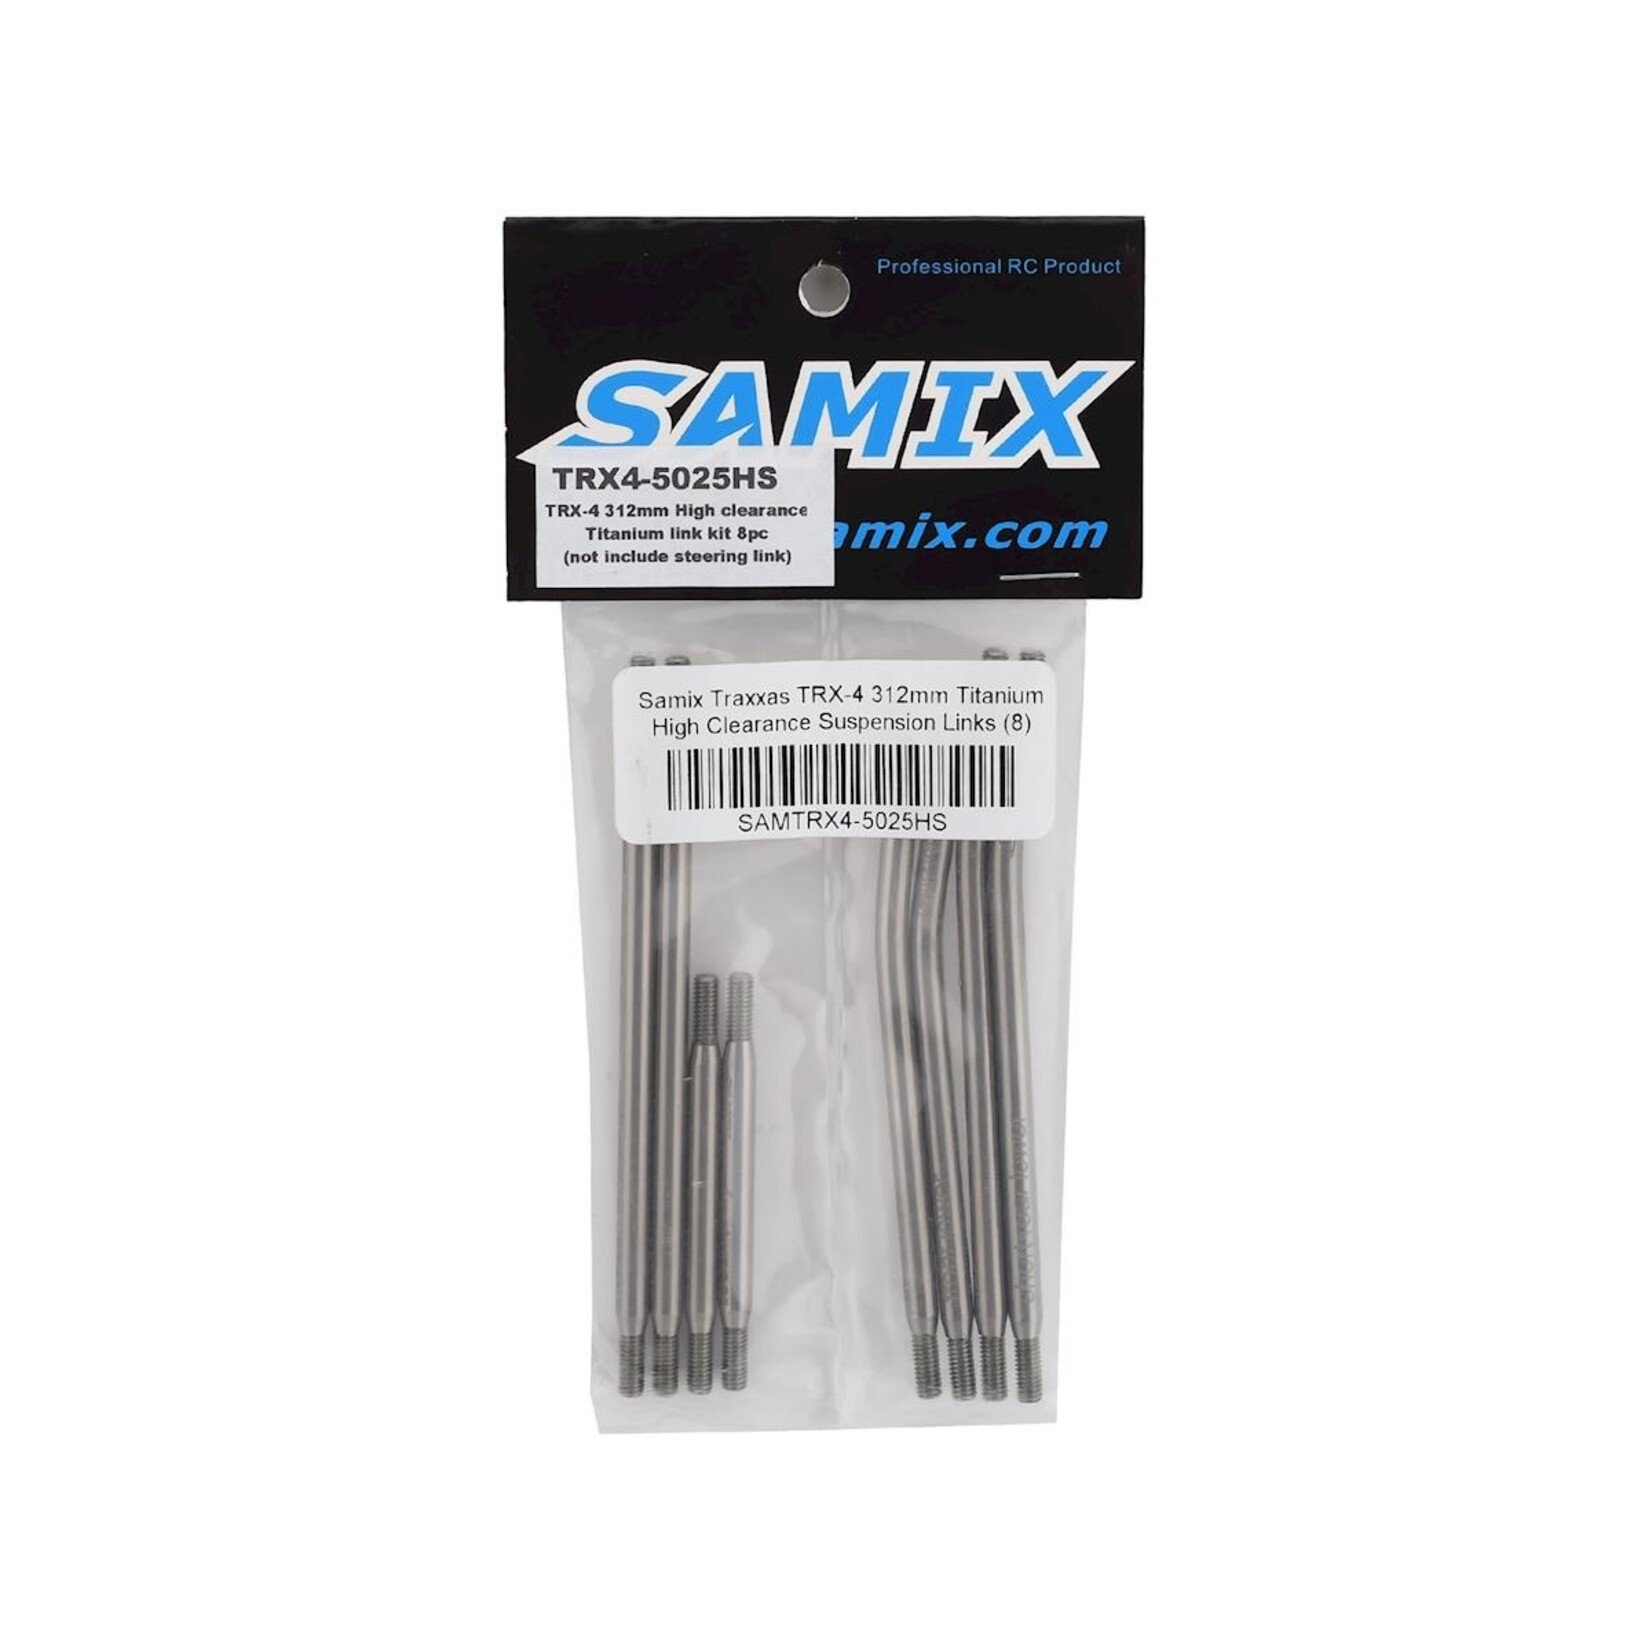 Samix Samix Traxxas TRX-4 312mm Titanium High Clearance Suspension Links (8) #TRX4-5025HS